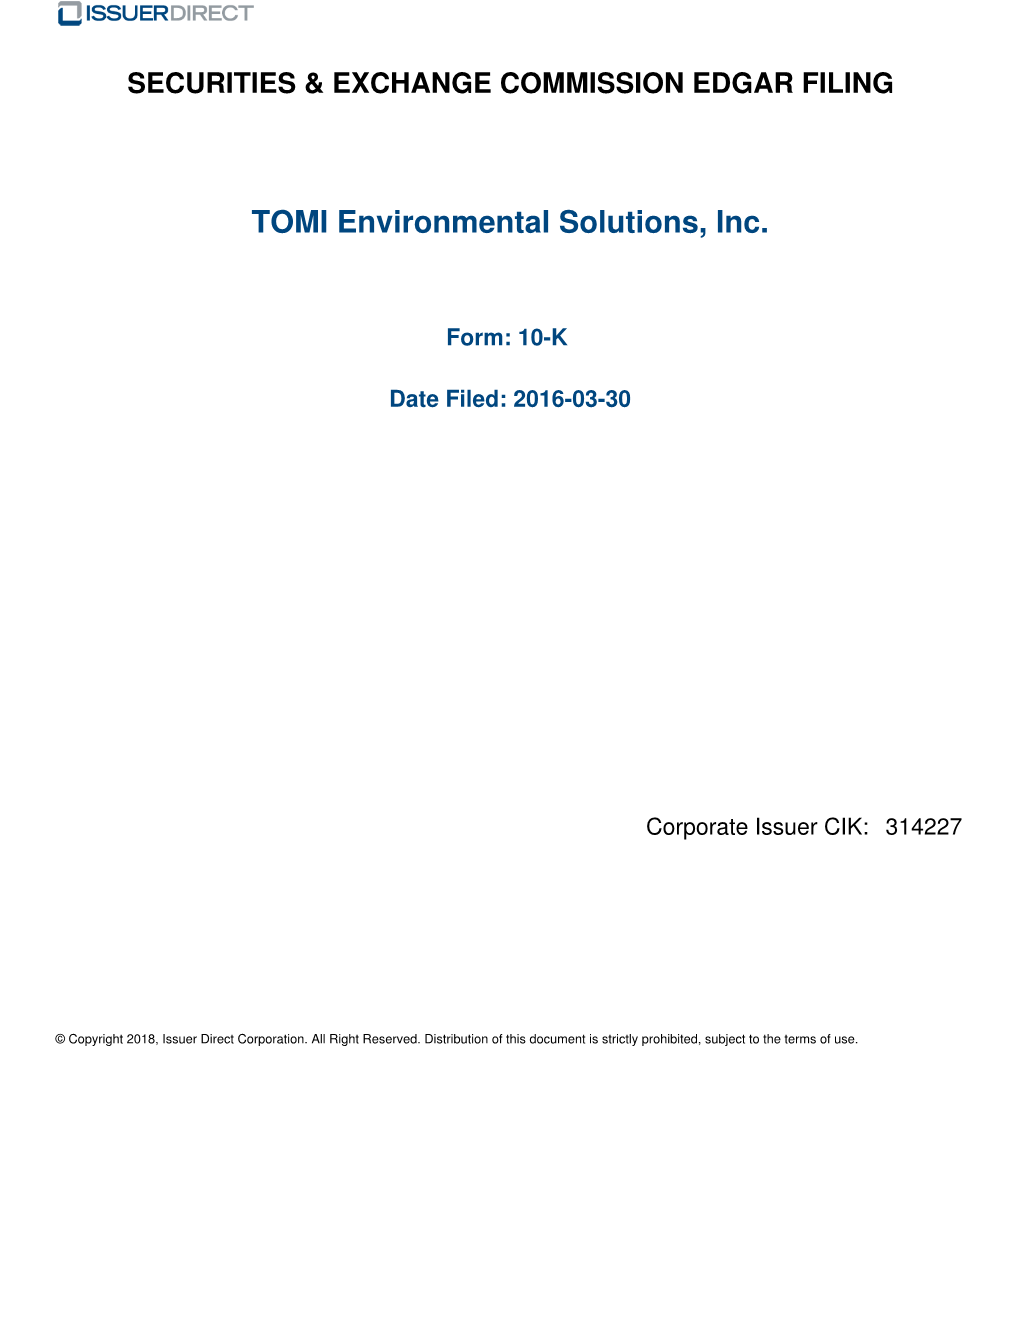 TOMI Environmental Solutions, Inc